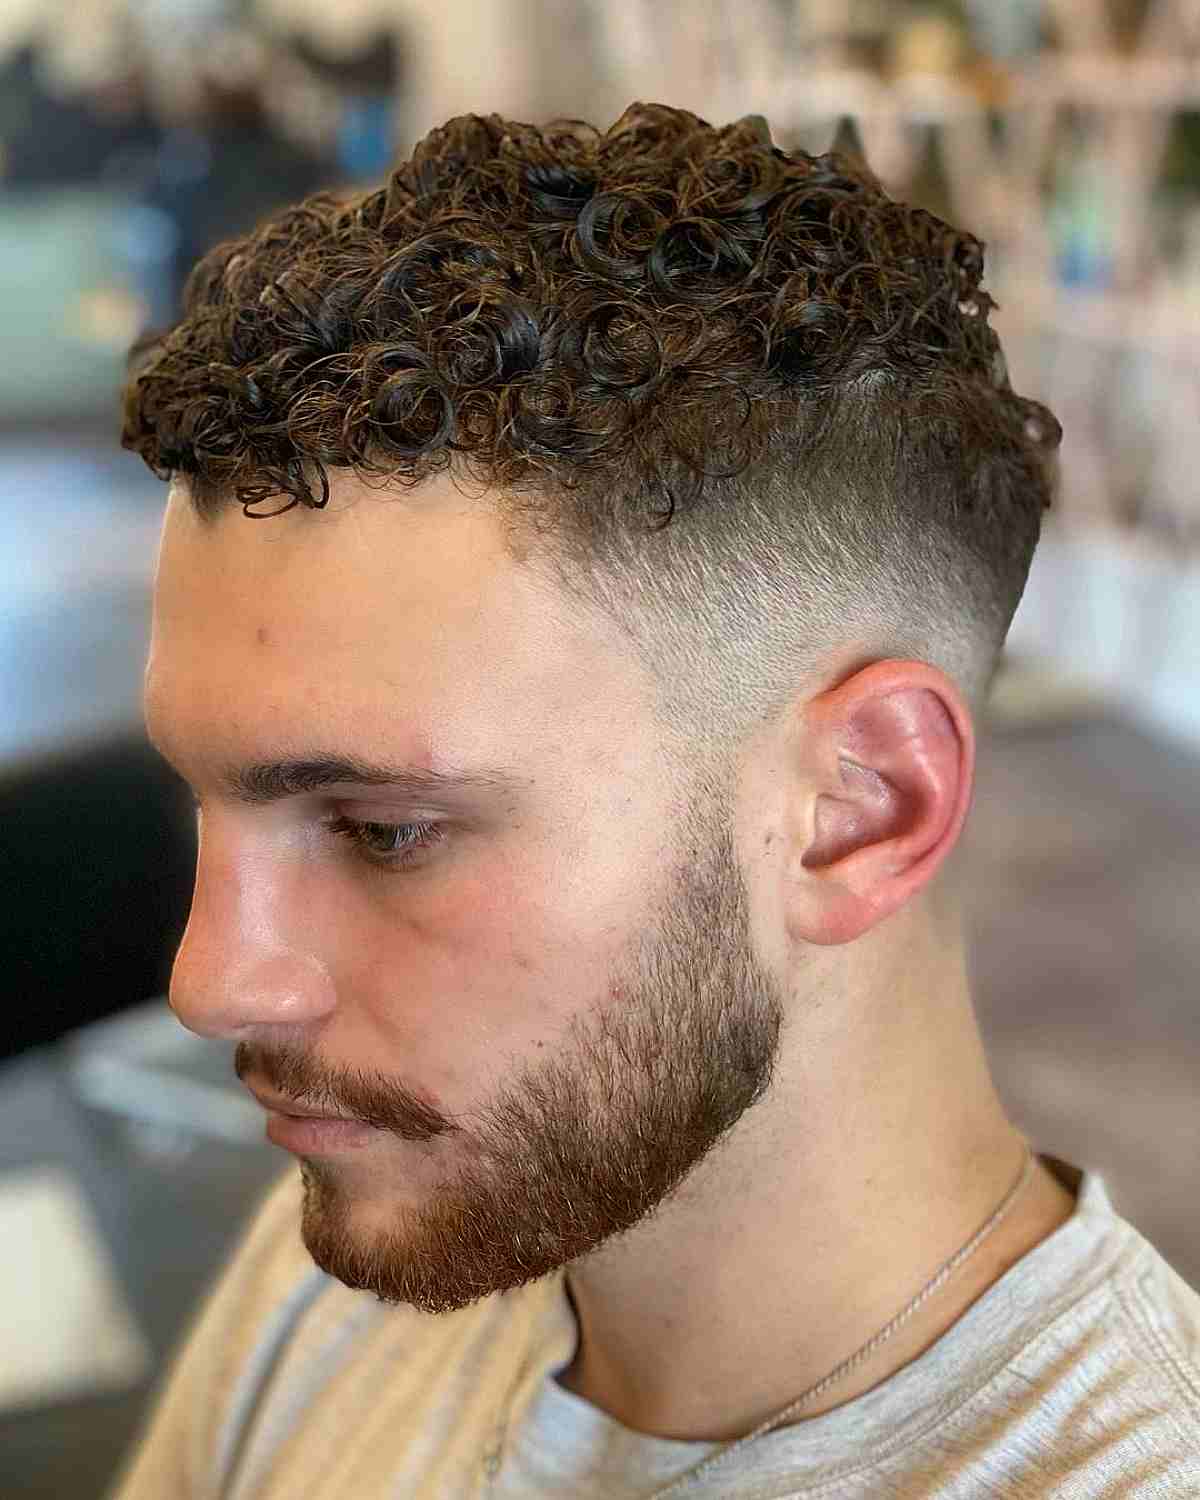 Curly Crop Haircut with a Beard